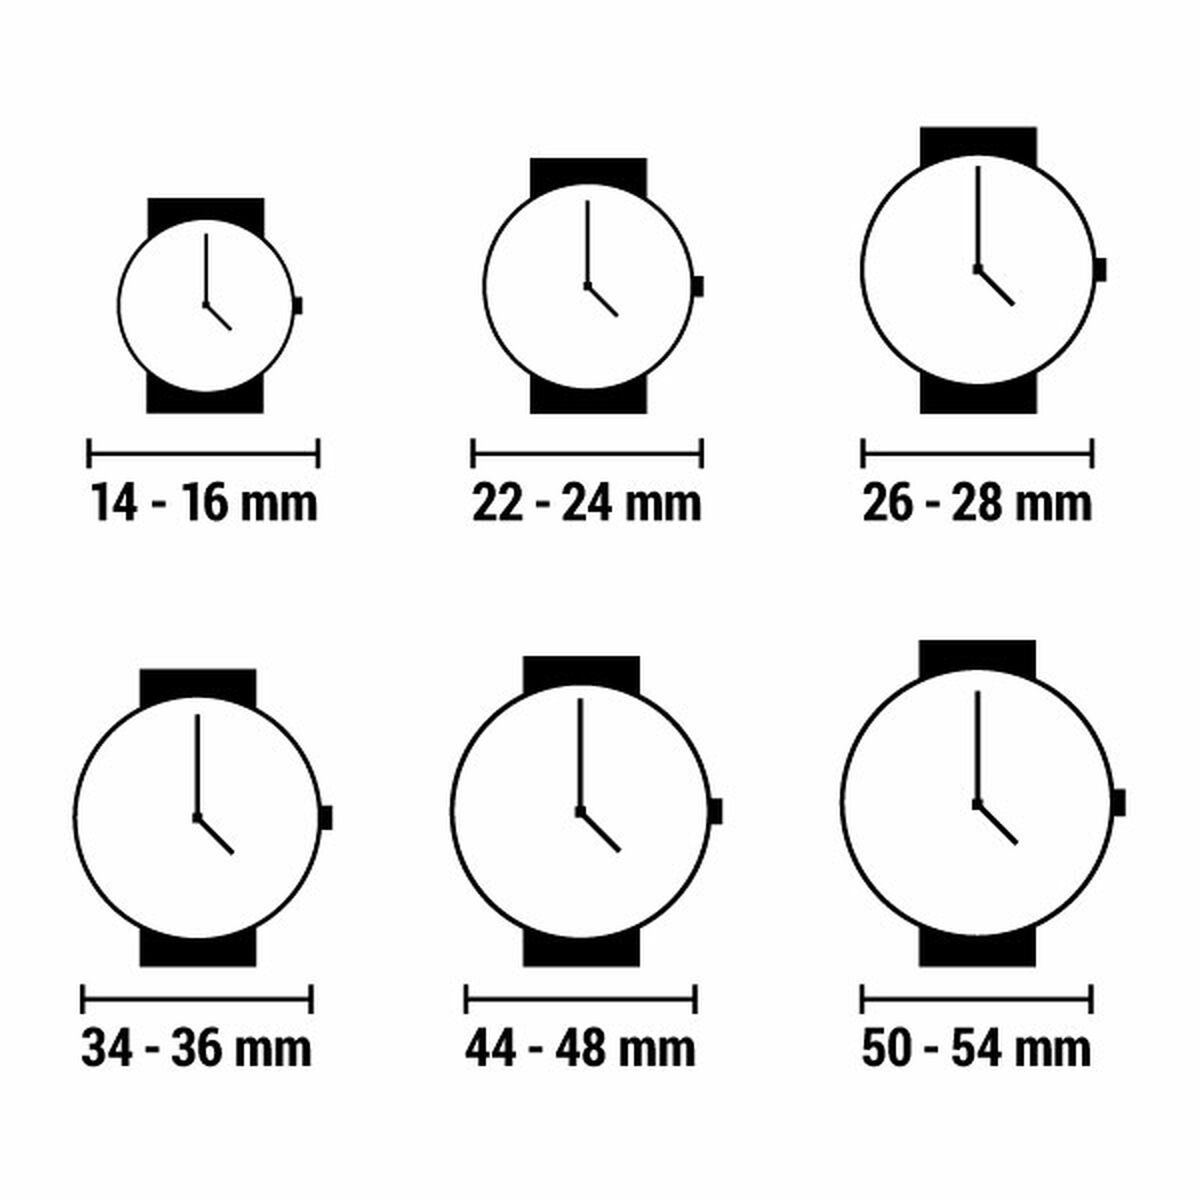 Horloge Dames Breil TW1723 (Ø 38 mm)